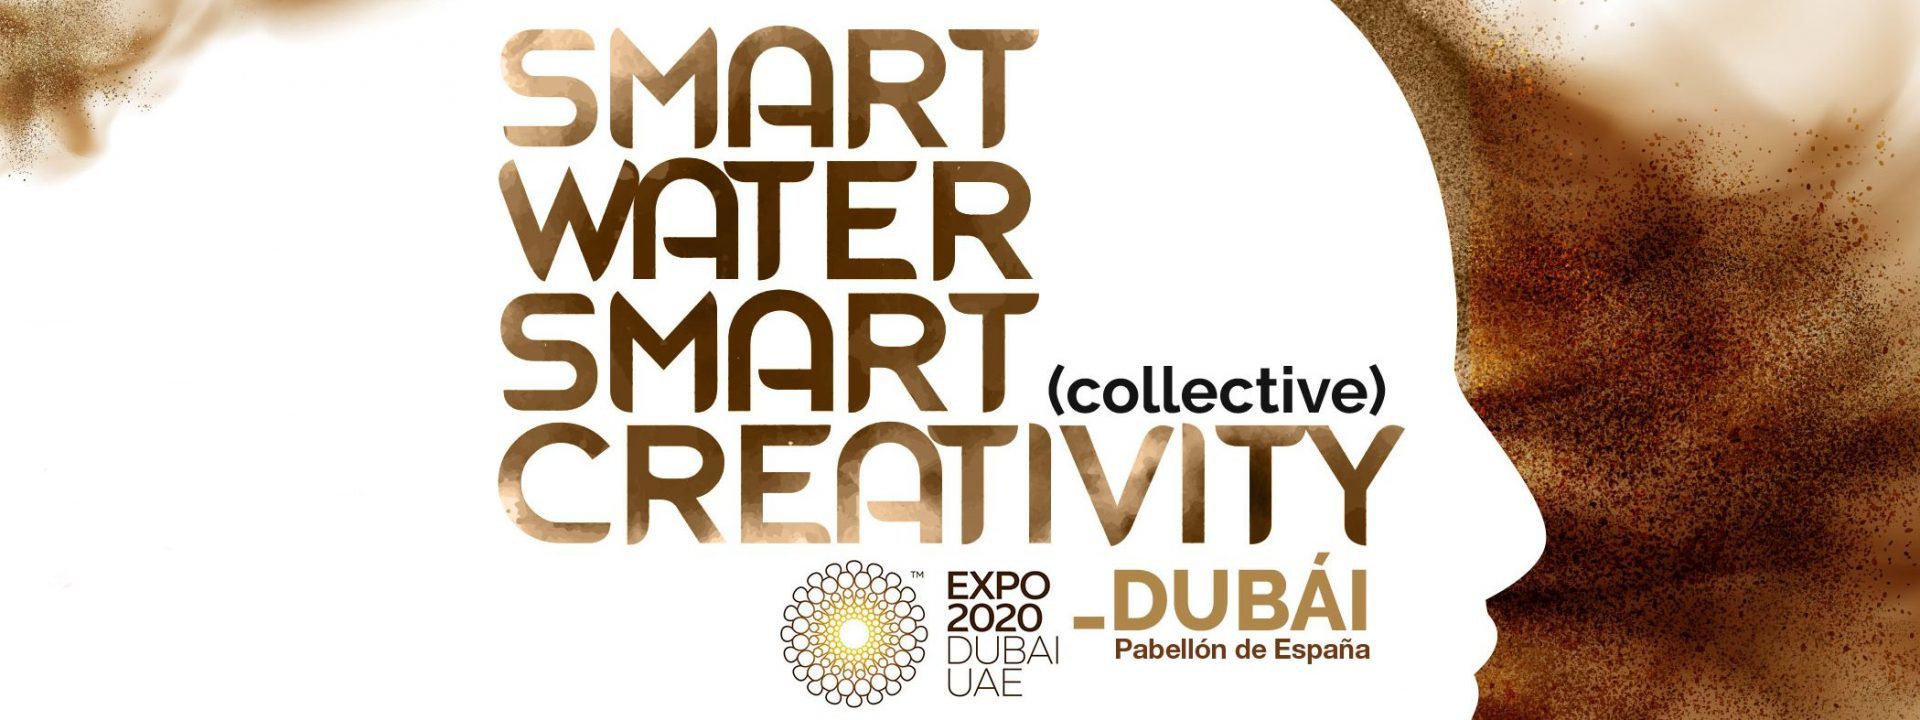 Smart Water, Smart (collective) Creativity-Dubai